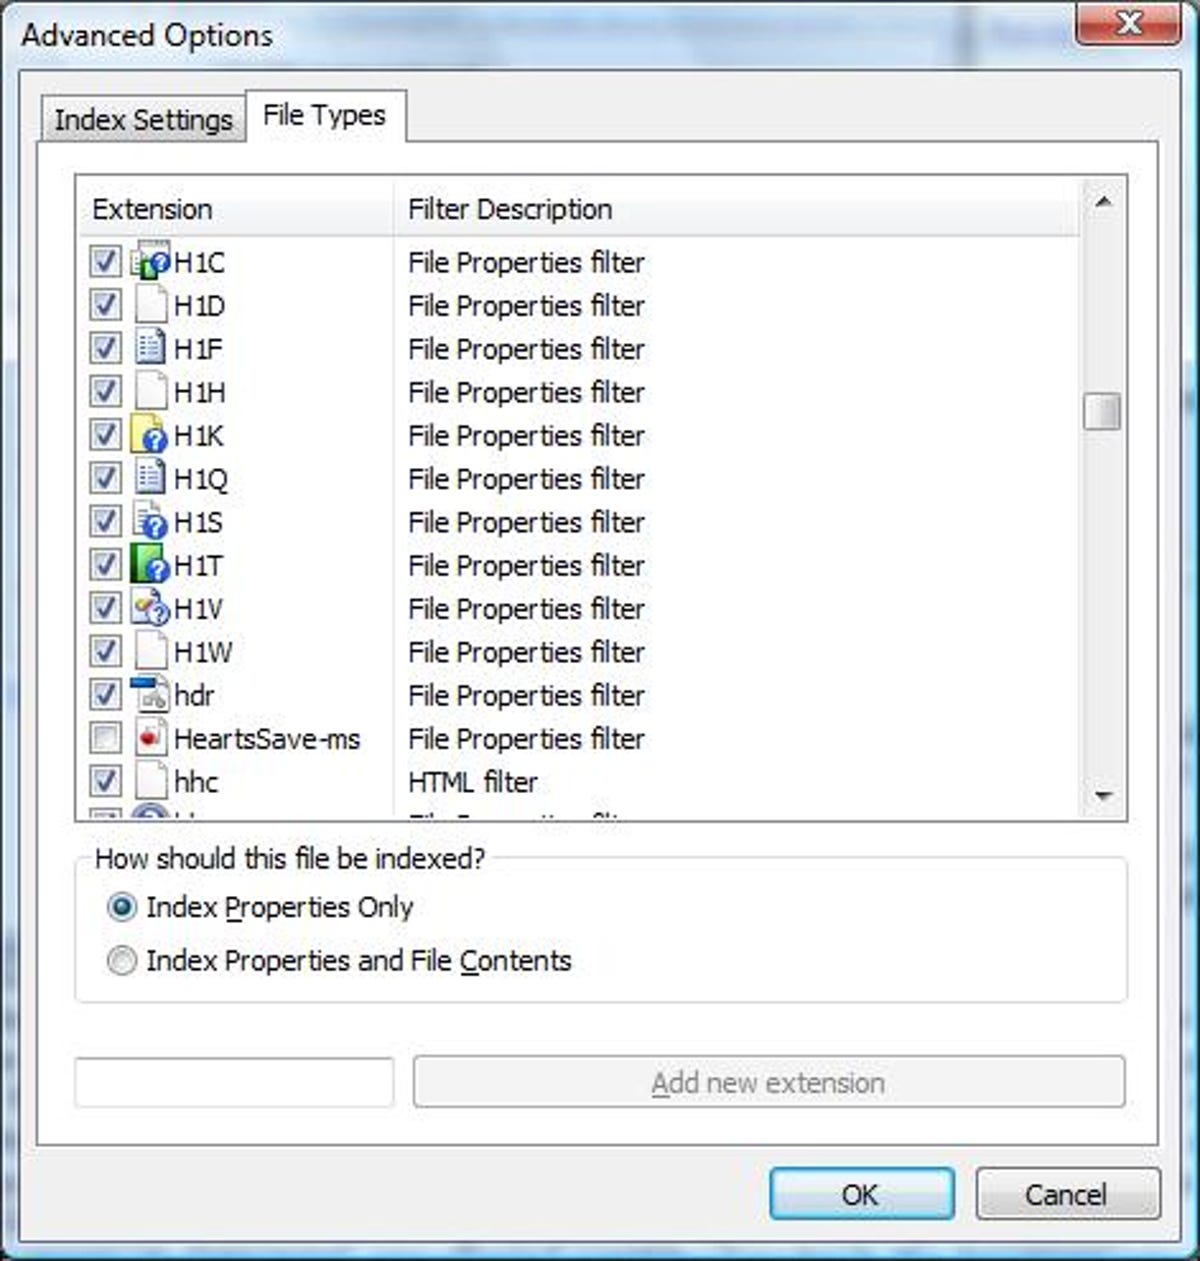 Windows Vista's Advanced Indexing Options dialog box